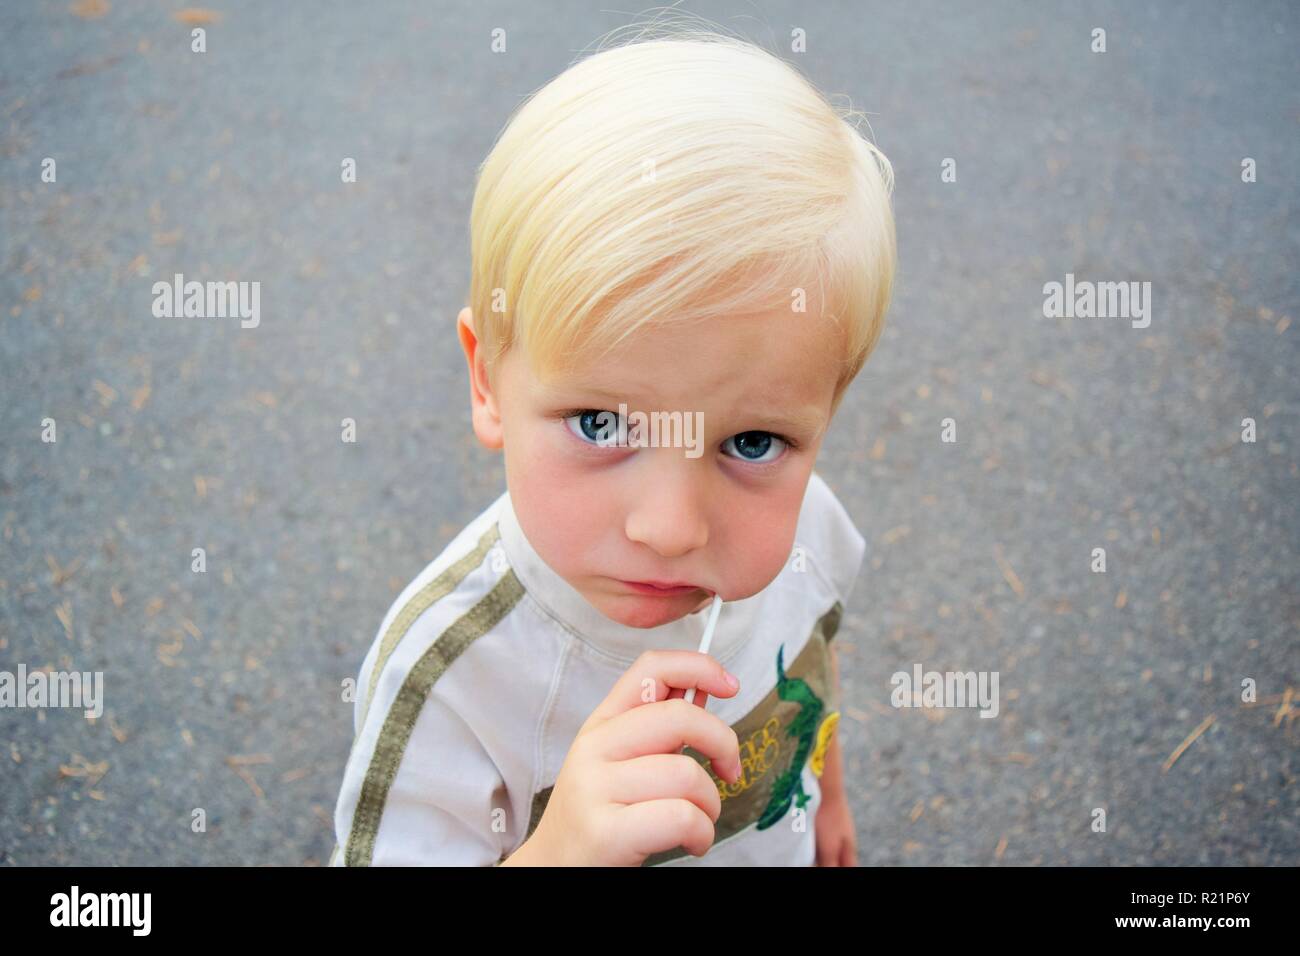 Little Boy Eating Lolly Pop Stock Photo